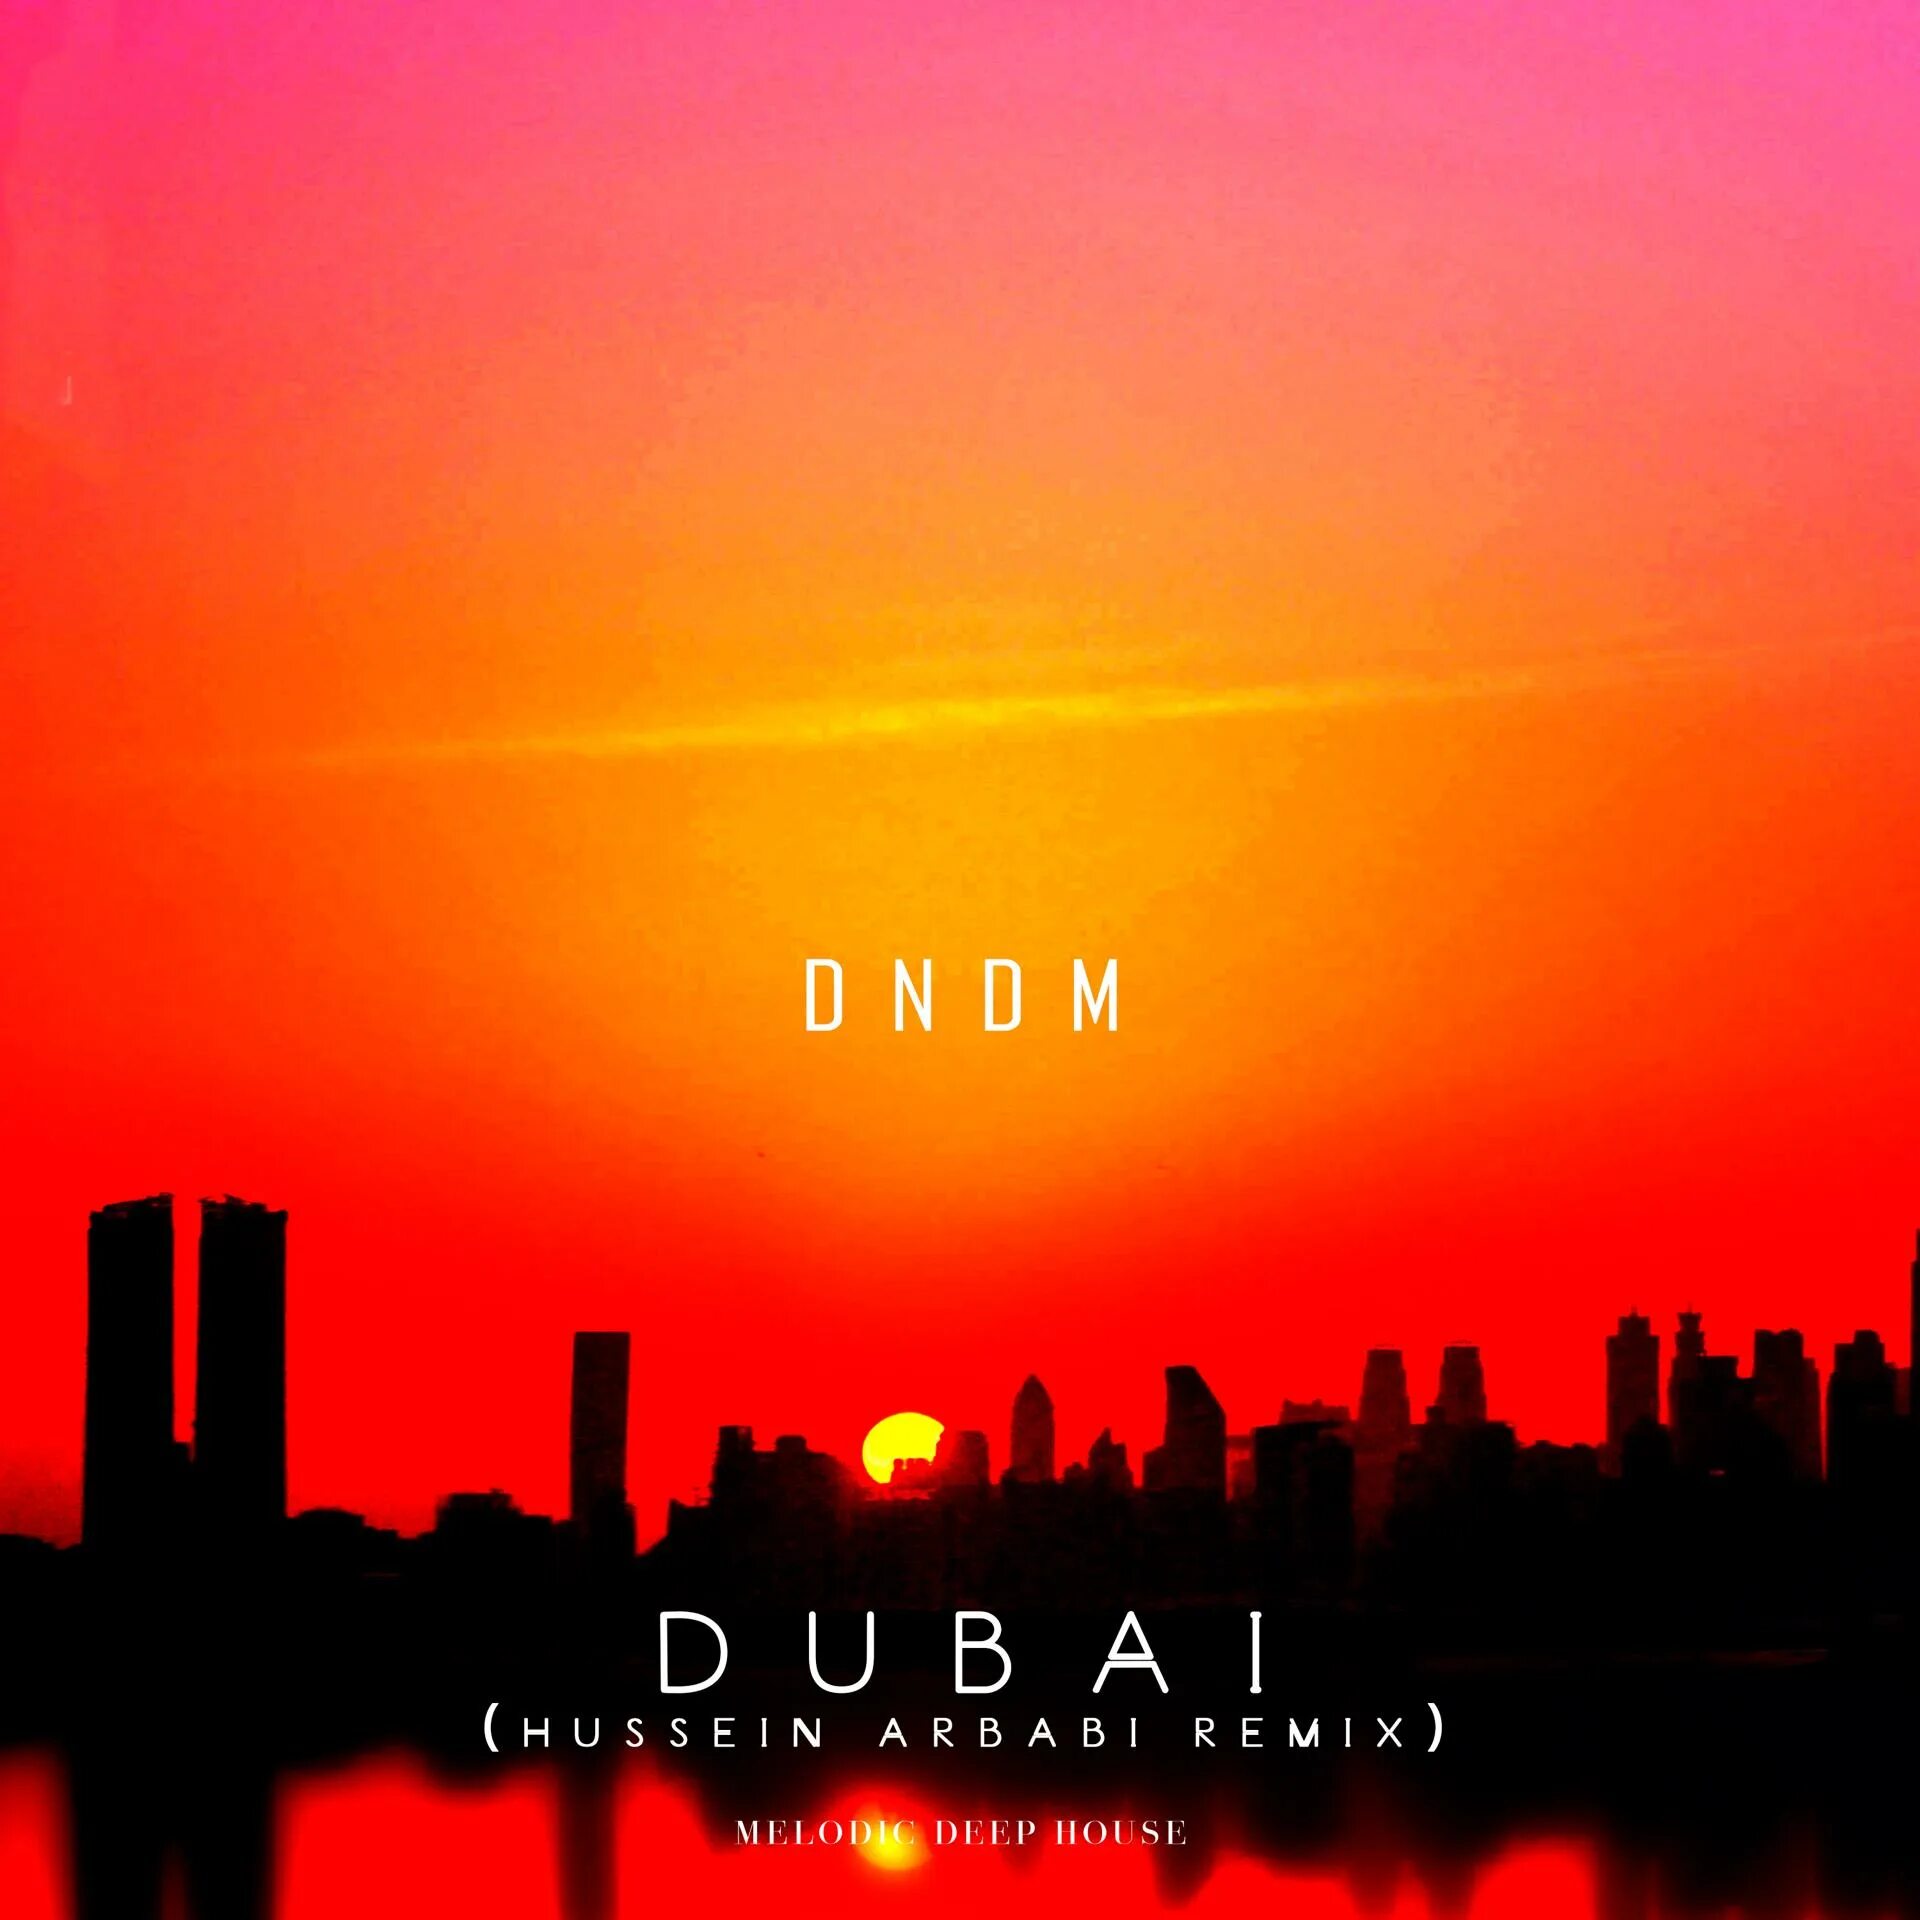 Hussein arbabi remix mp3. Дубай Хусейн Арбаби. Dndm - Dubai (Hussein Arbabi Remix). Дндм Дубай. Hussein Arbabi Remix.